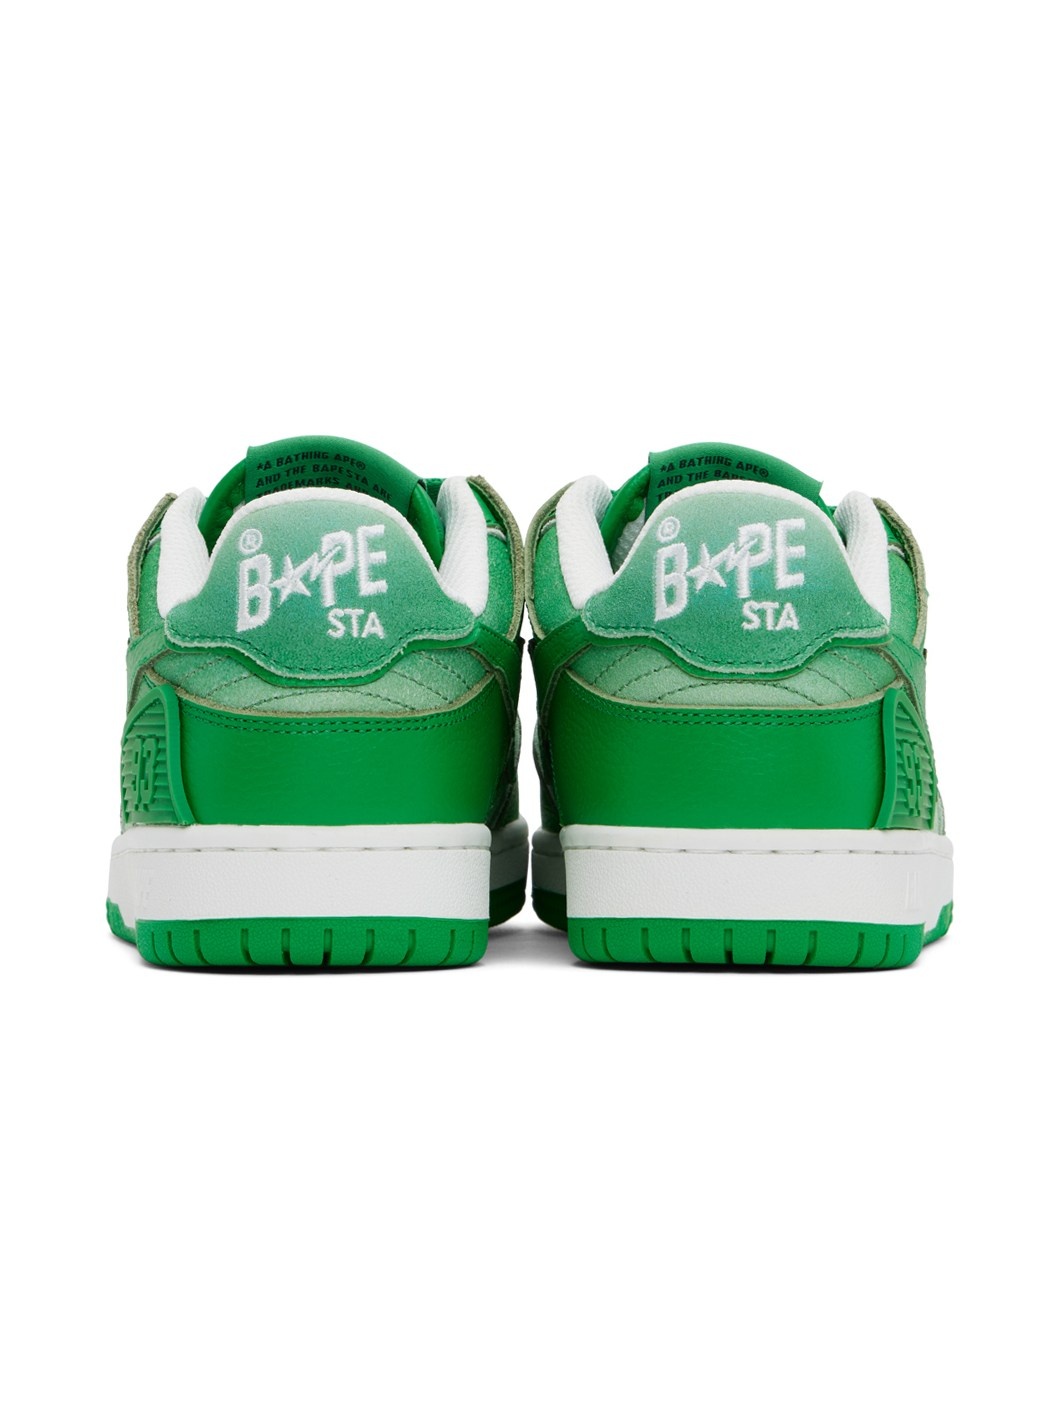 Green Sk8 Sta #4 Sneakers - 2